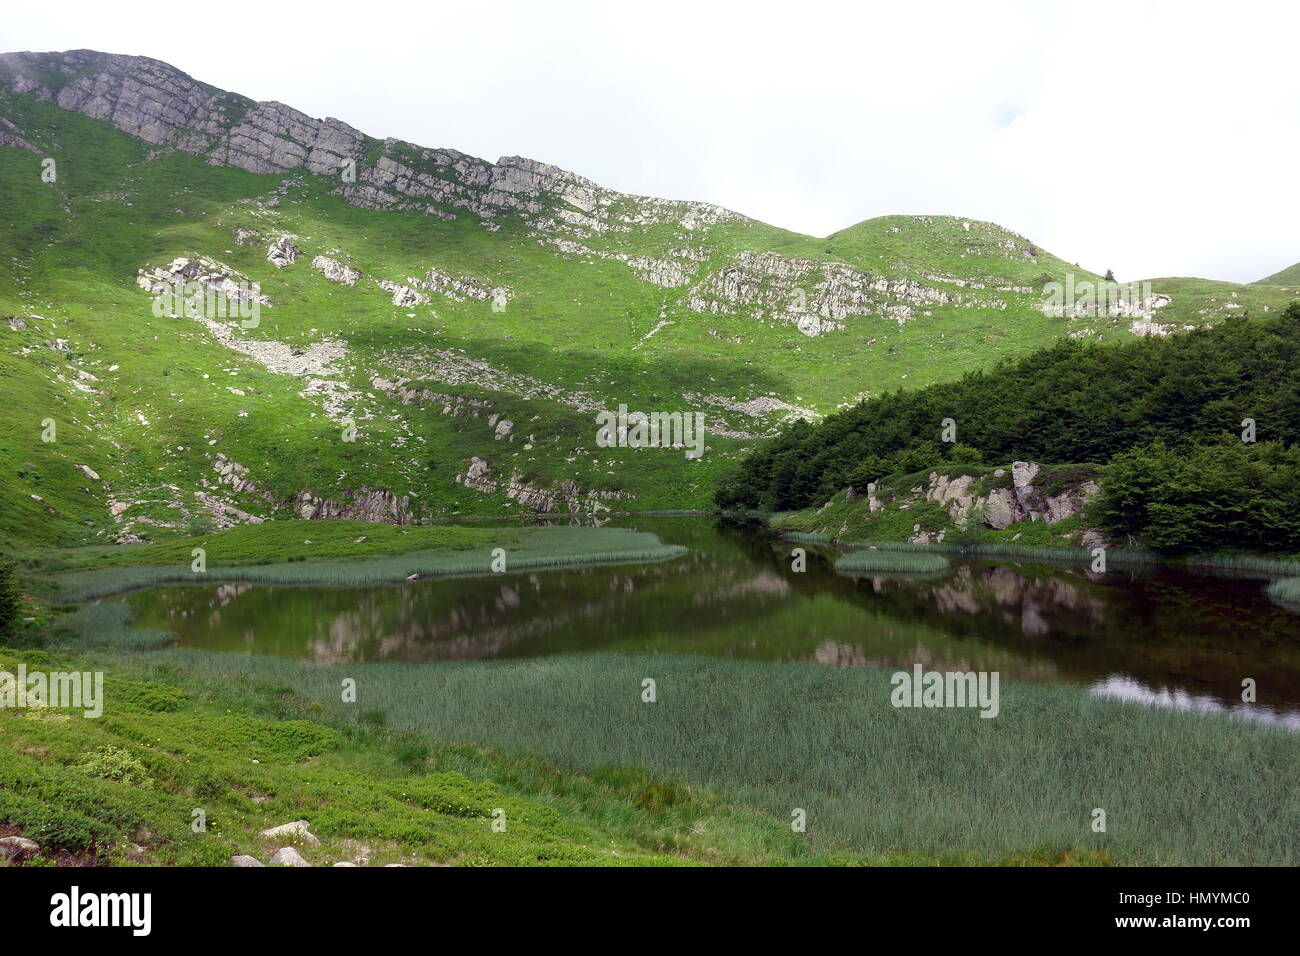 Lago Nero (Schwarzer See) Berg Landschaft - Valle del Sestaione, Abetone, Pistoia, Toskana, Italien, Europa - Bergwelt Serie, Gletschersee Stockfoto